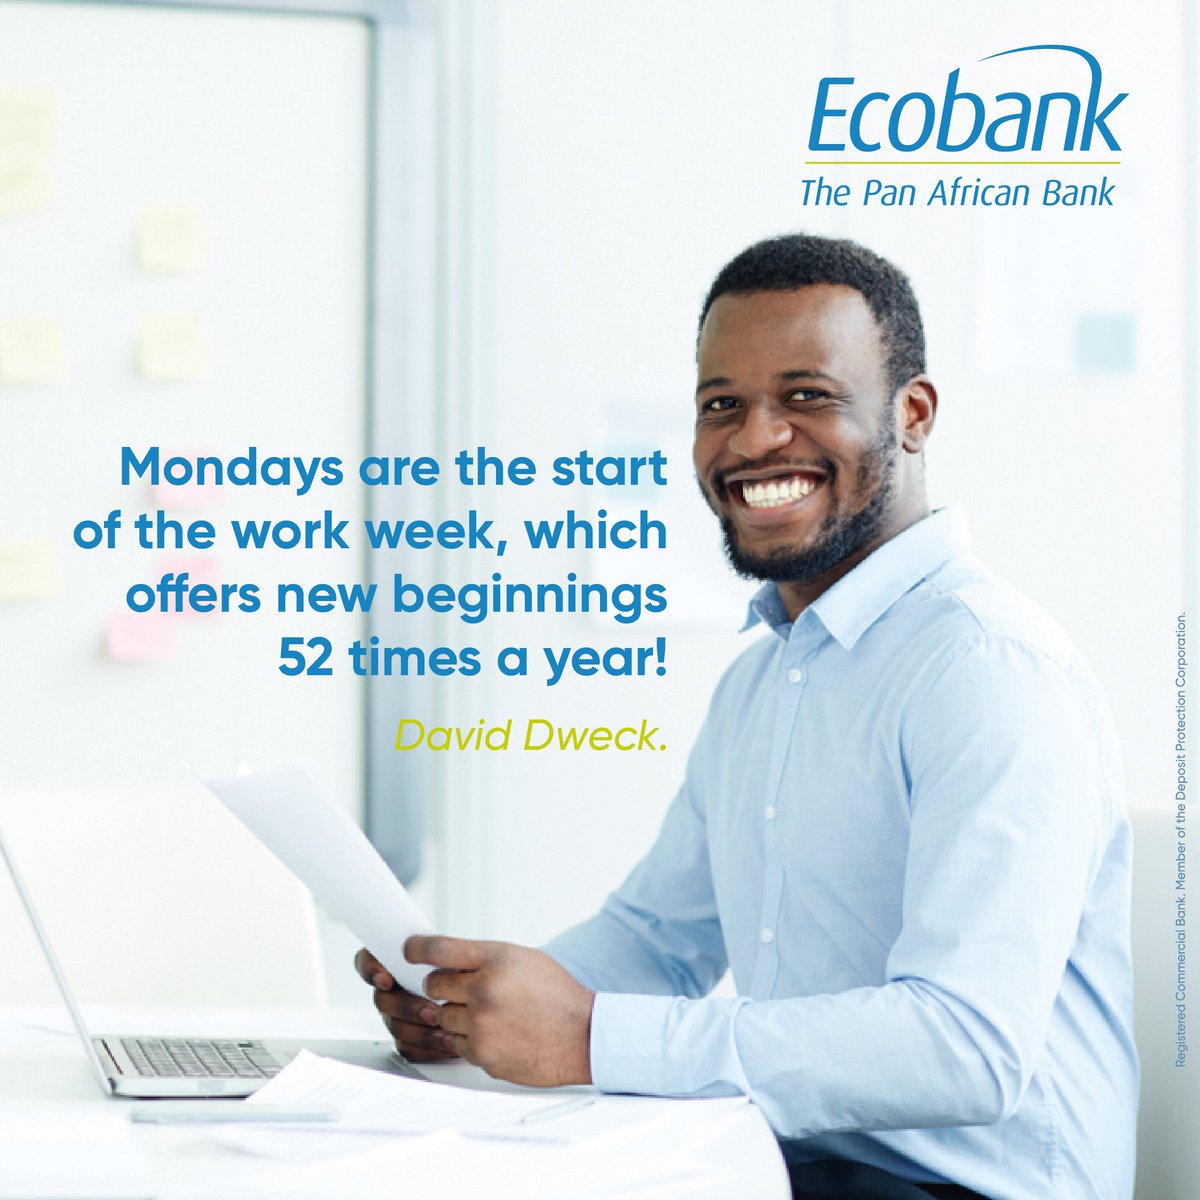 Make the most of your Monday and crash your goals.

#freshstart 
#newbeginnings
#ABetterWay 
#ABetterAfrica